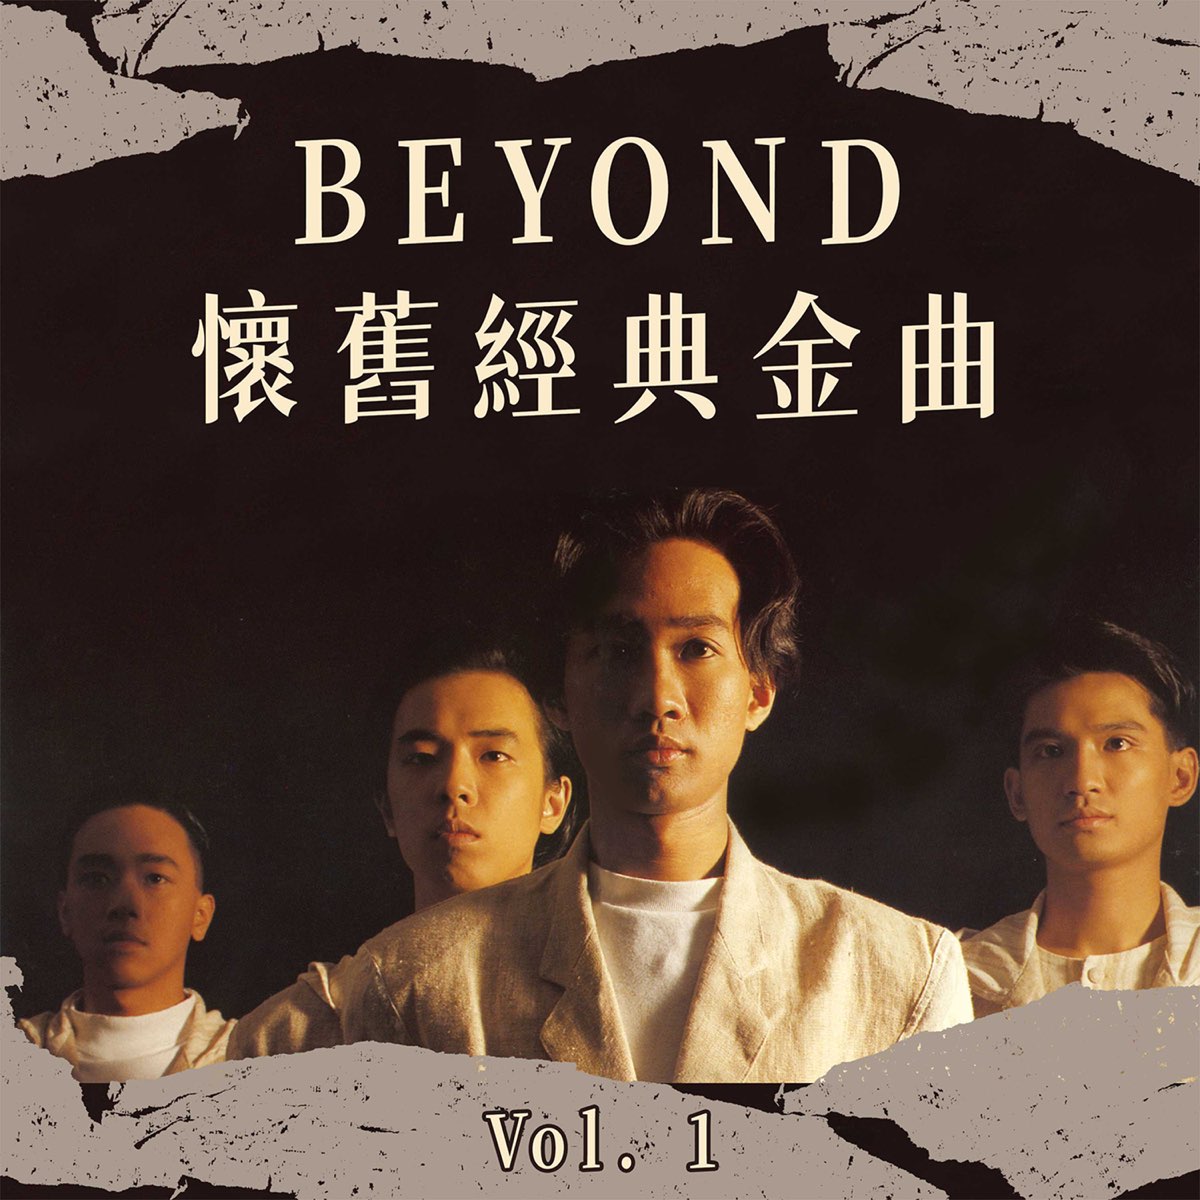 Beyond - 歌手 - 网易云音乐